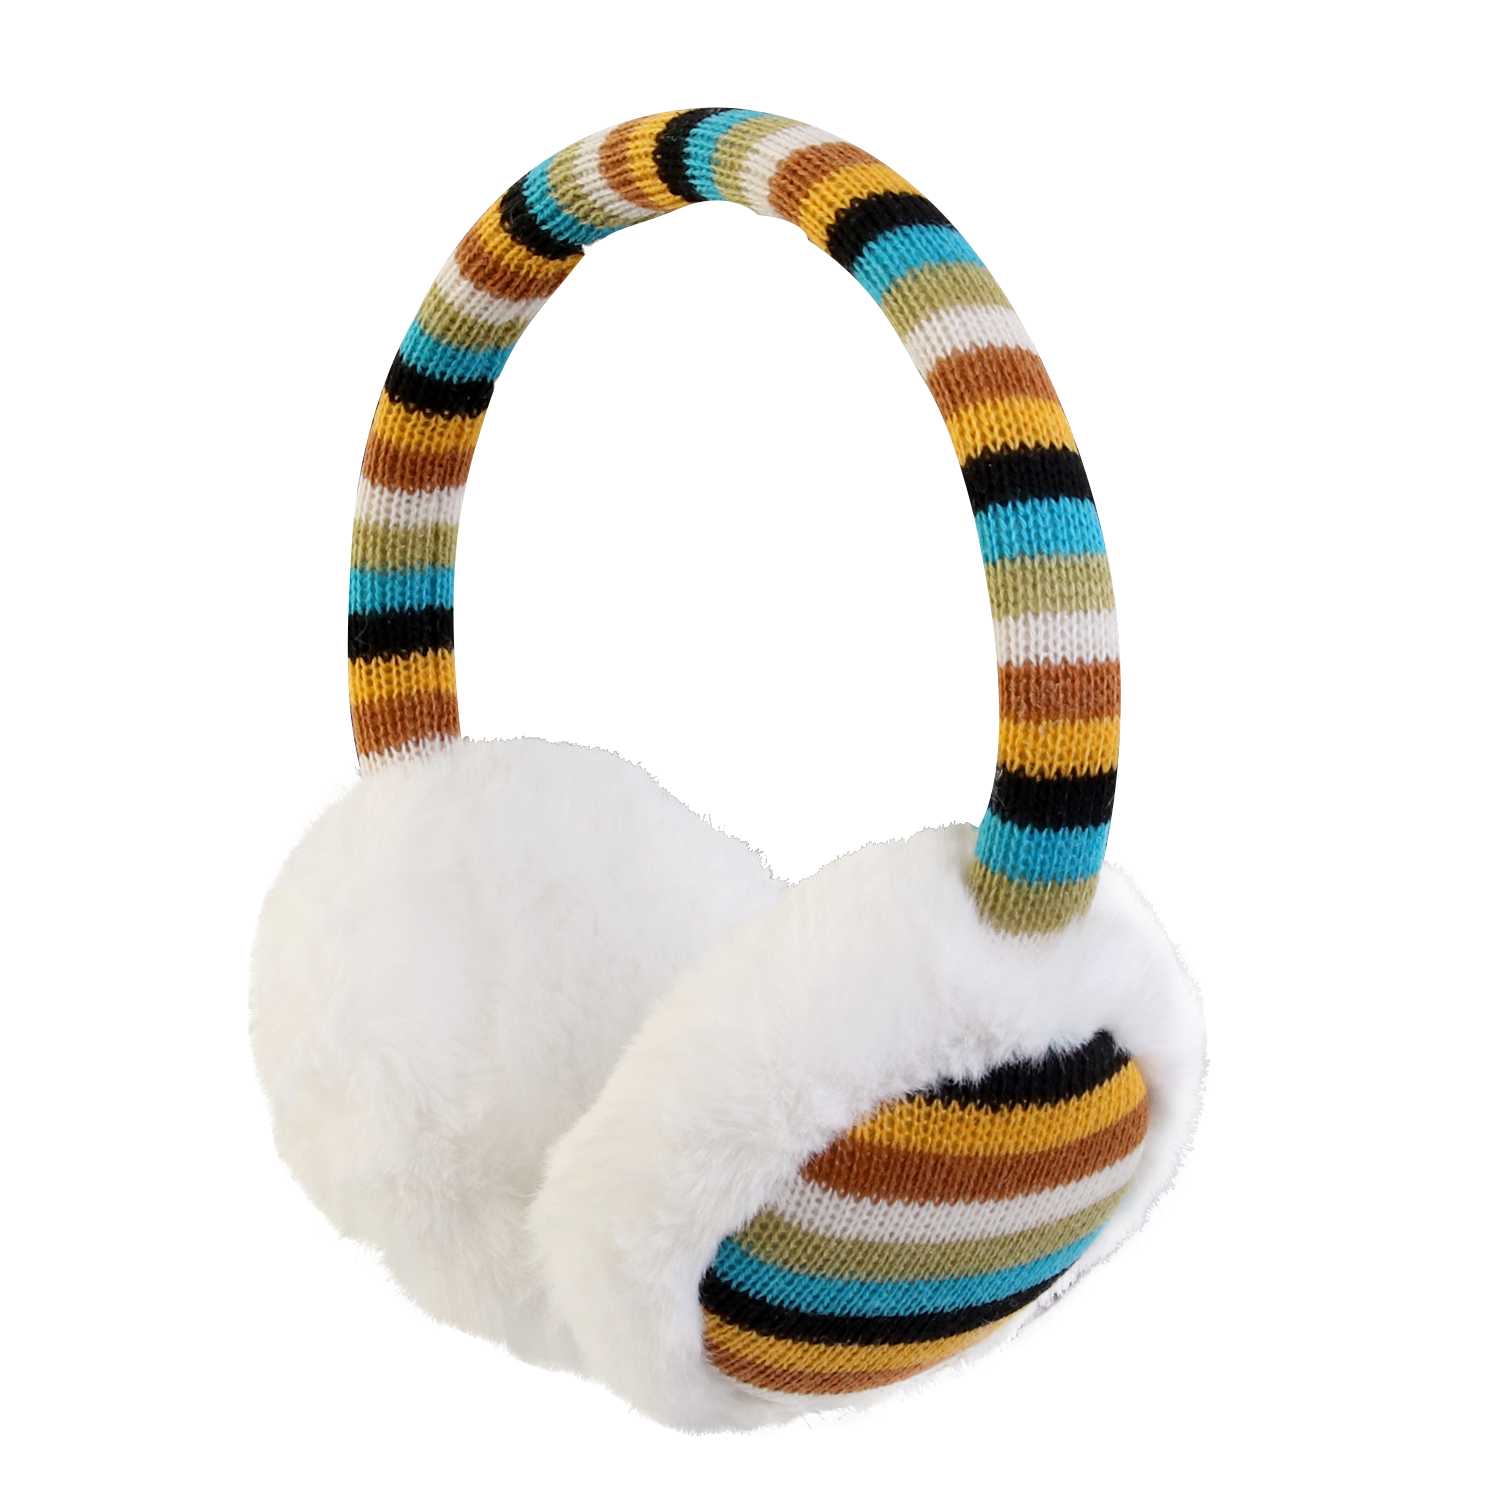 TechXtras Wired Headphone - Stripes